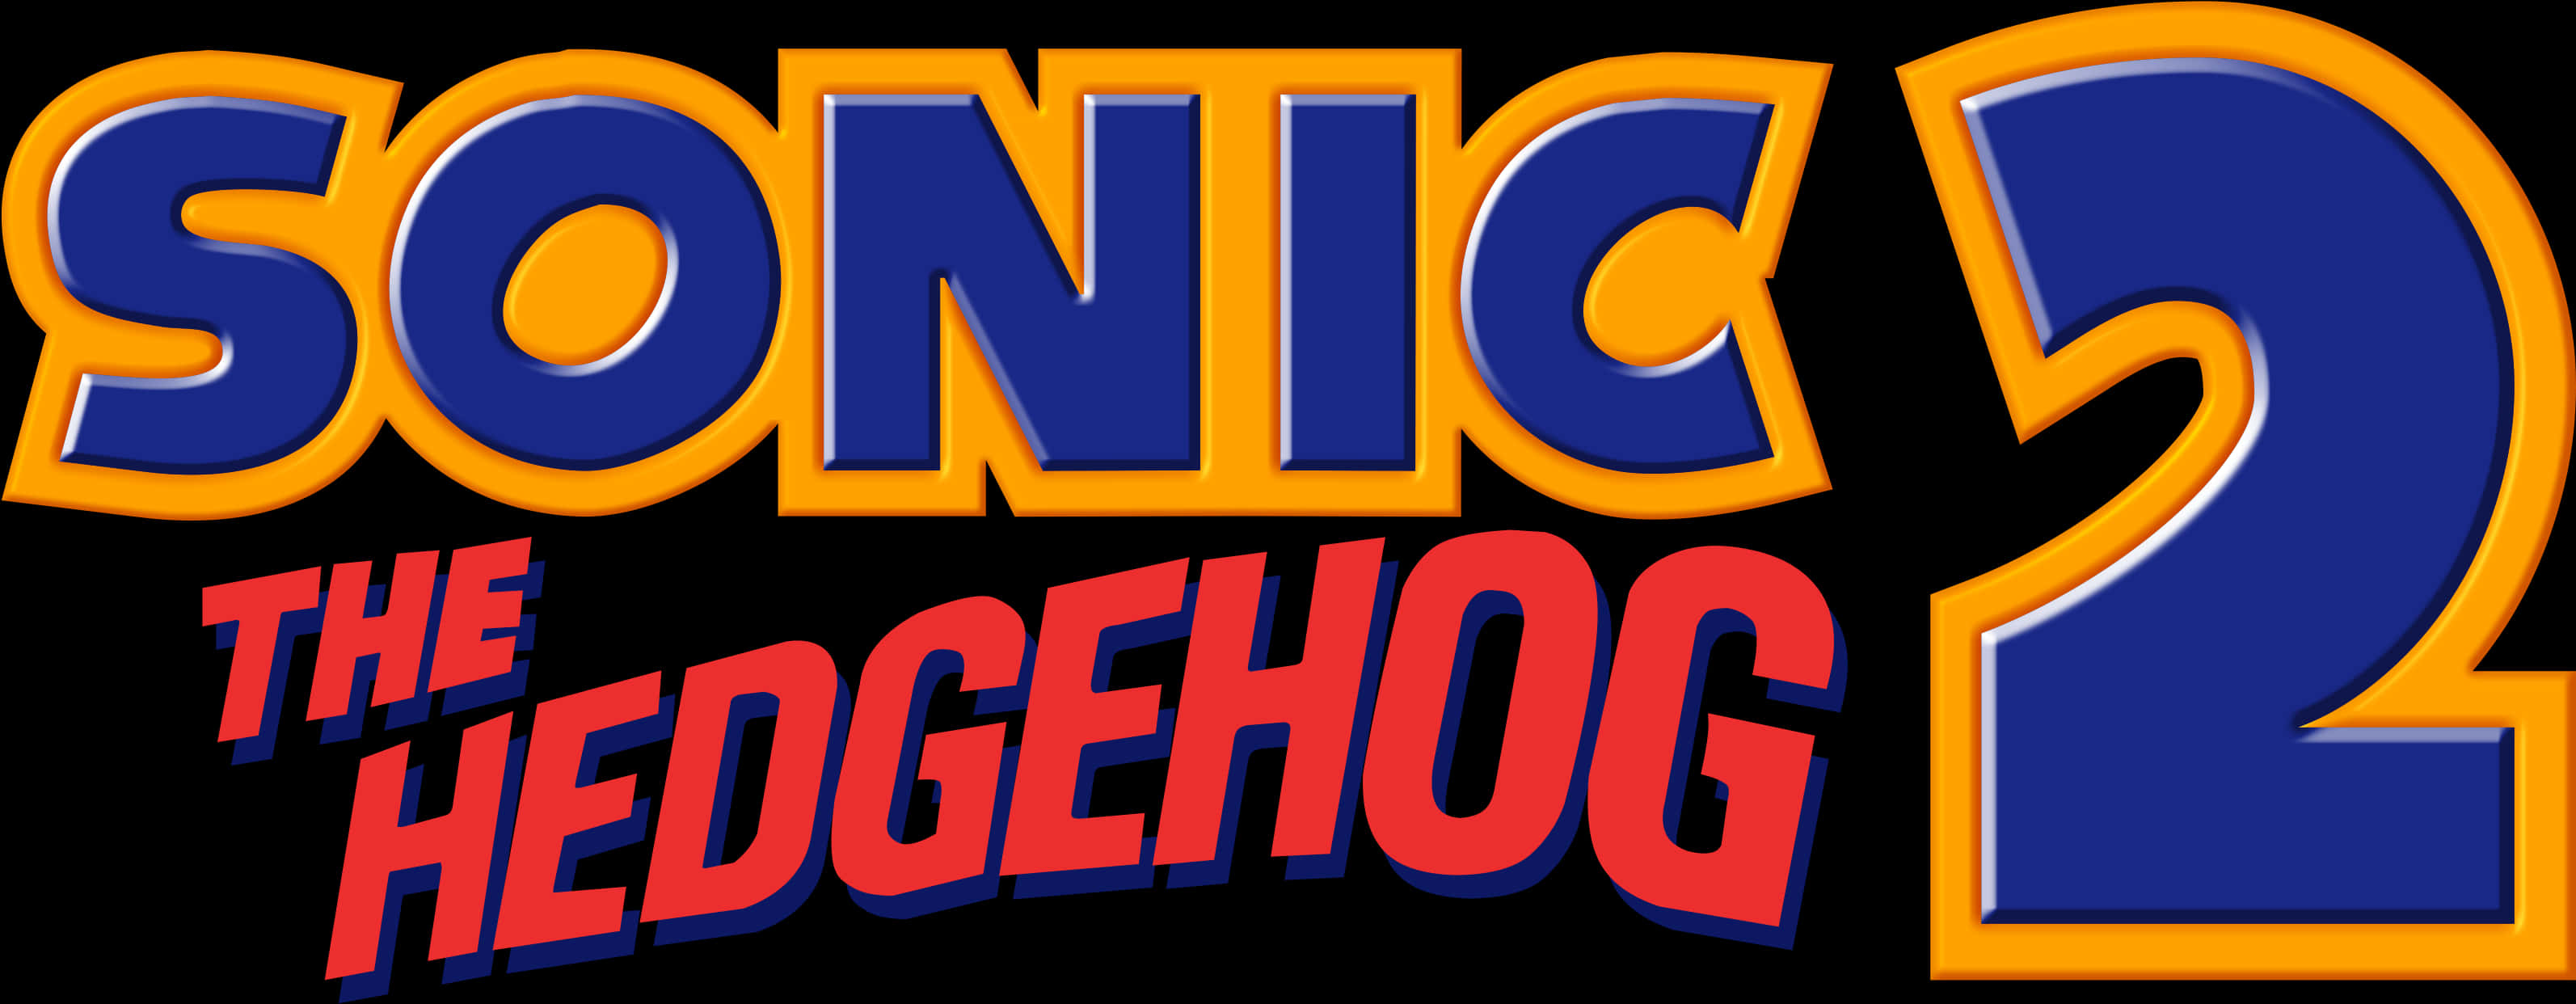 Sonic The Hedgehog2 Logo PNG image